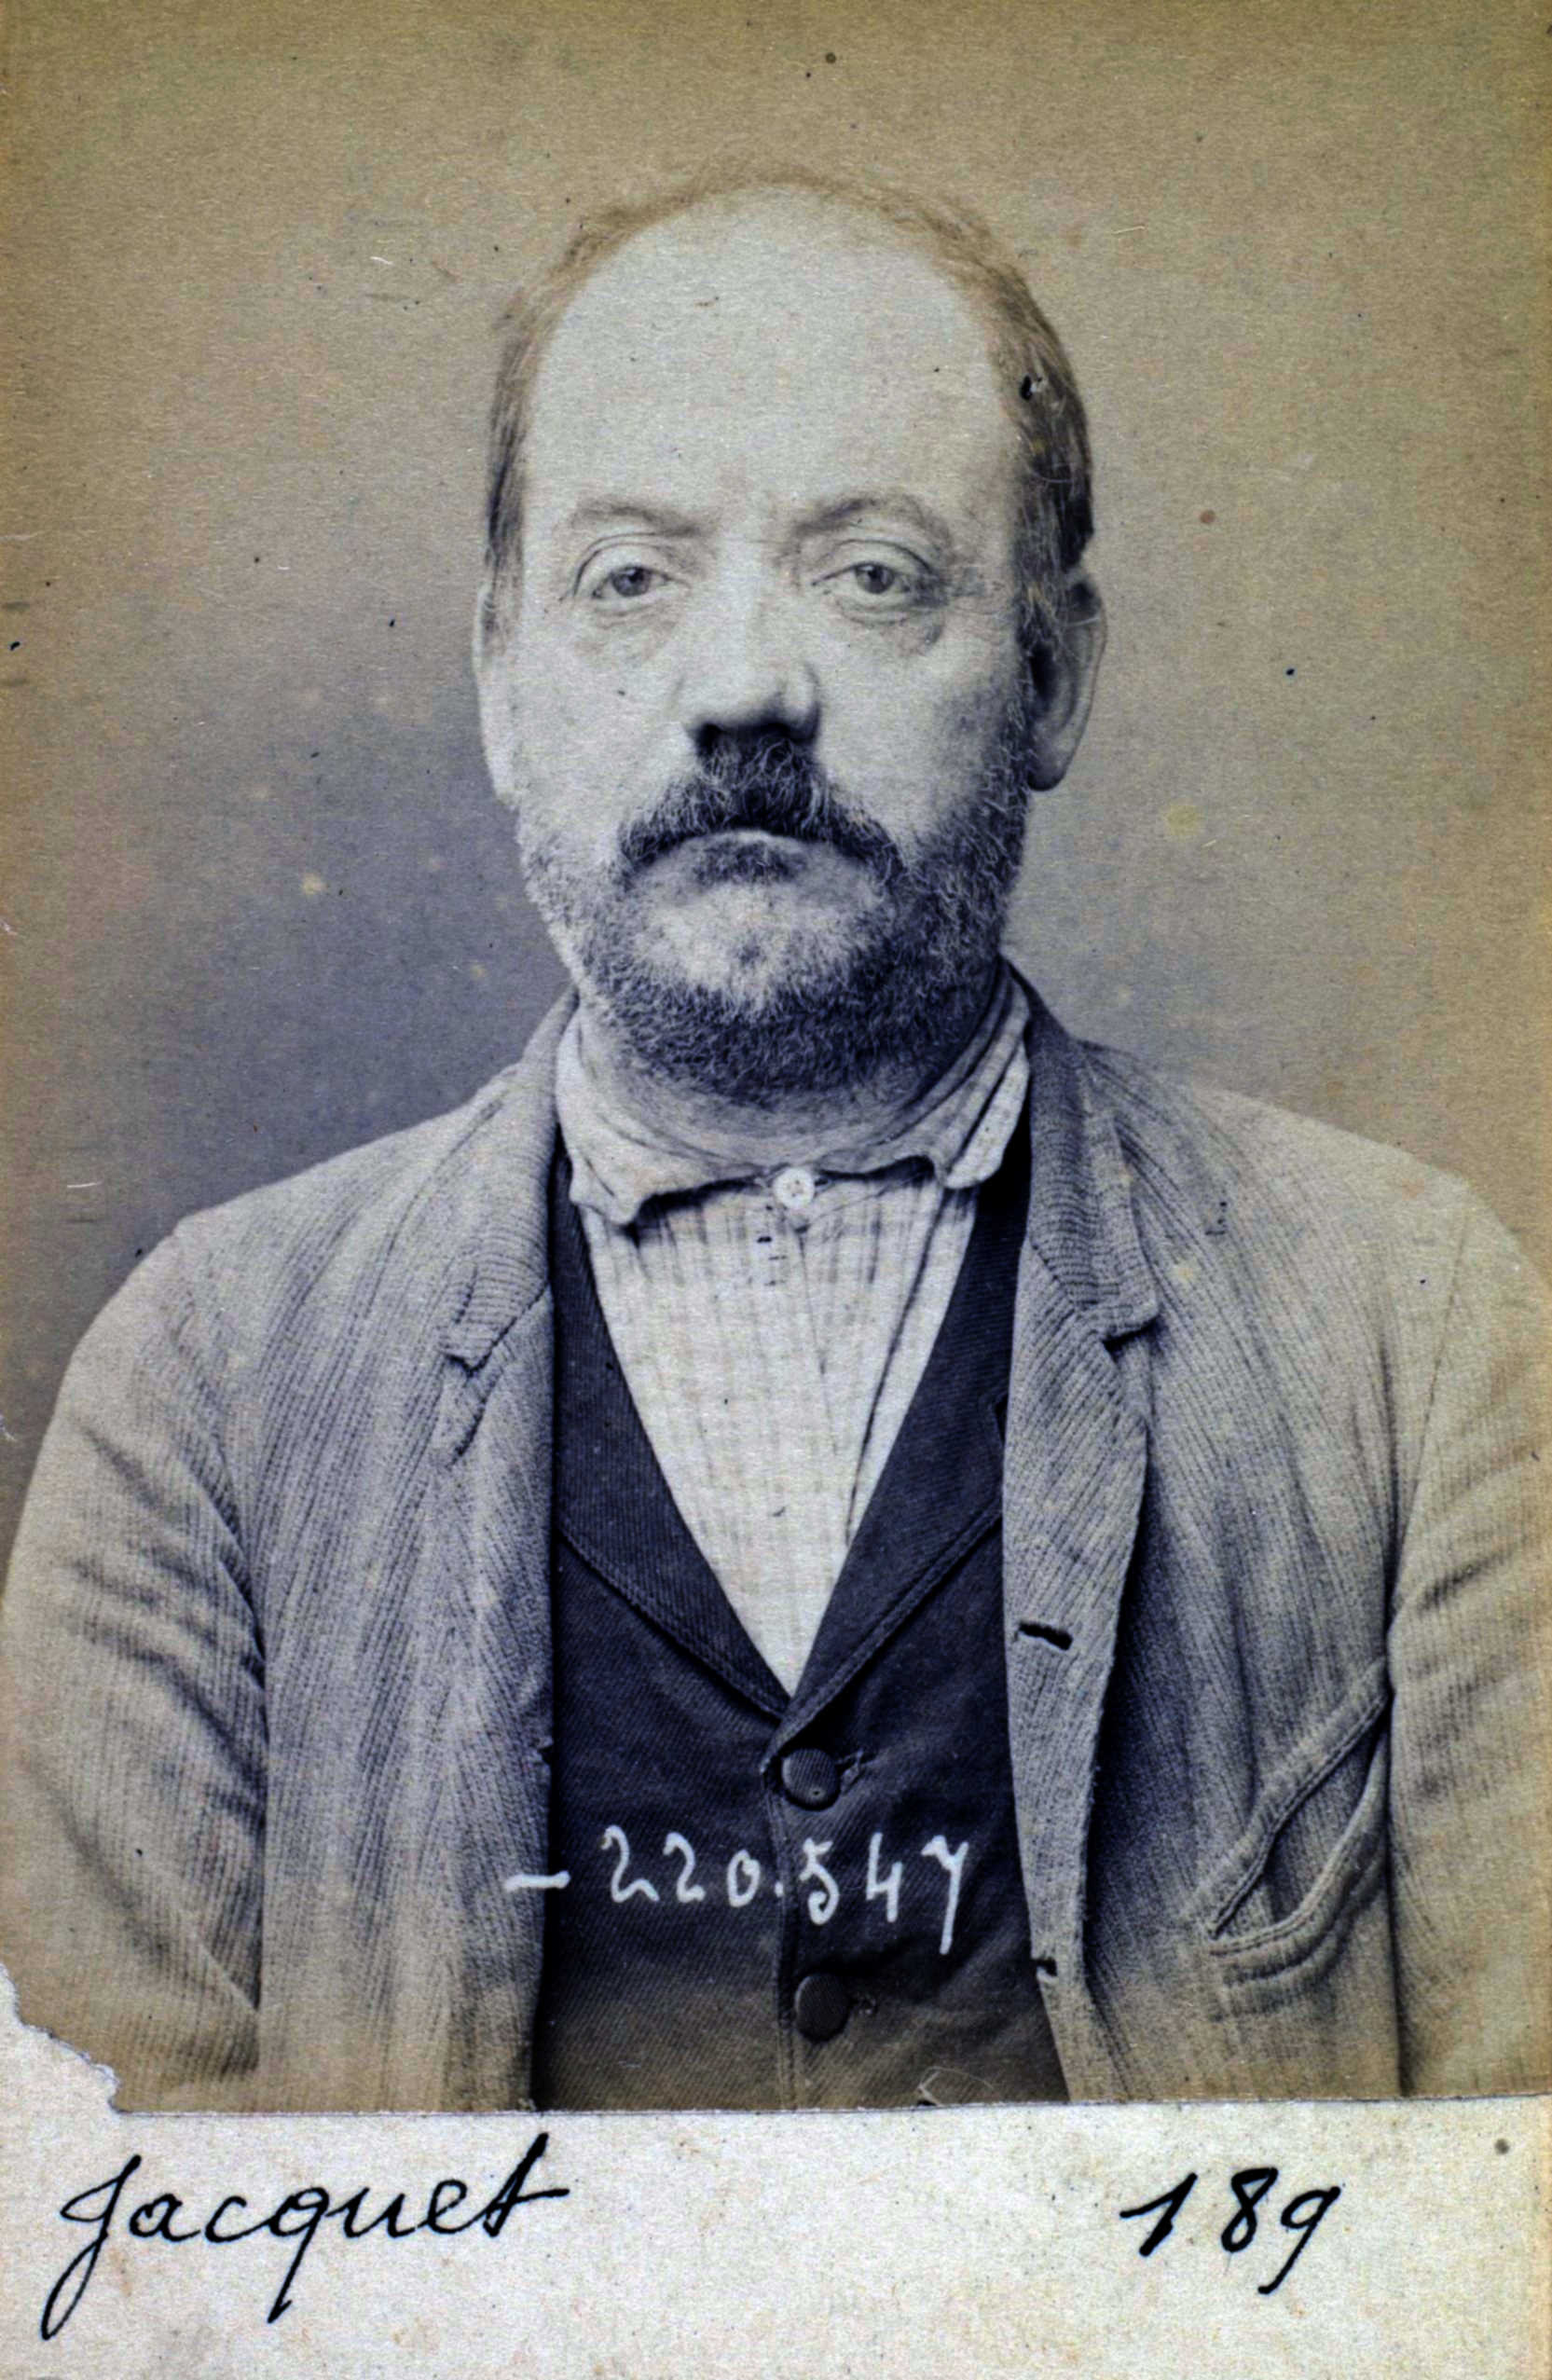 Foto policíaca d'Hippolyte Jacquet (7 de juliol de 1894)